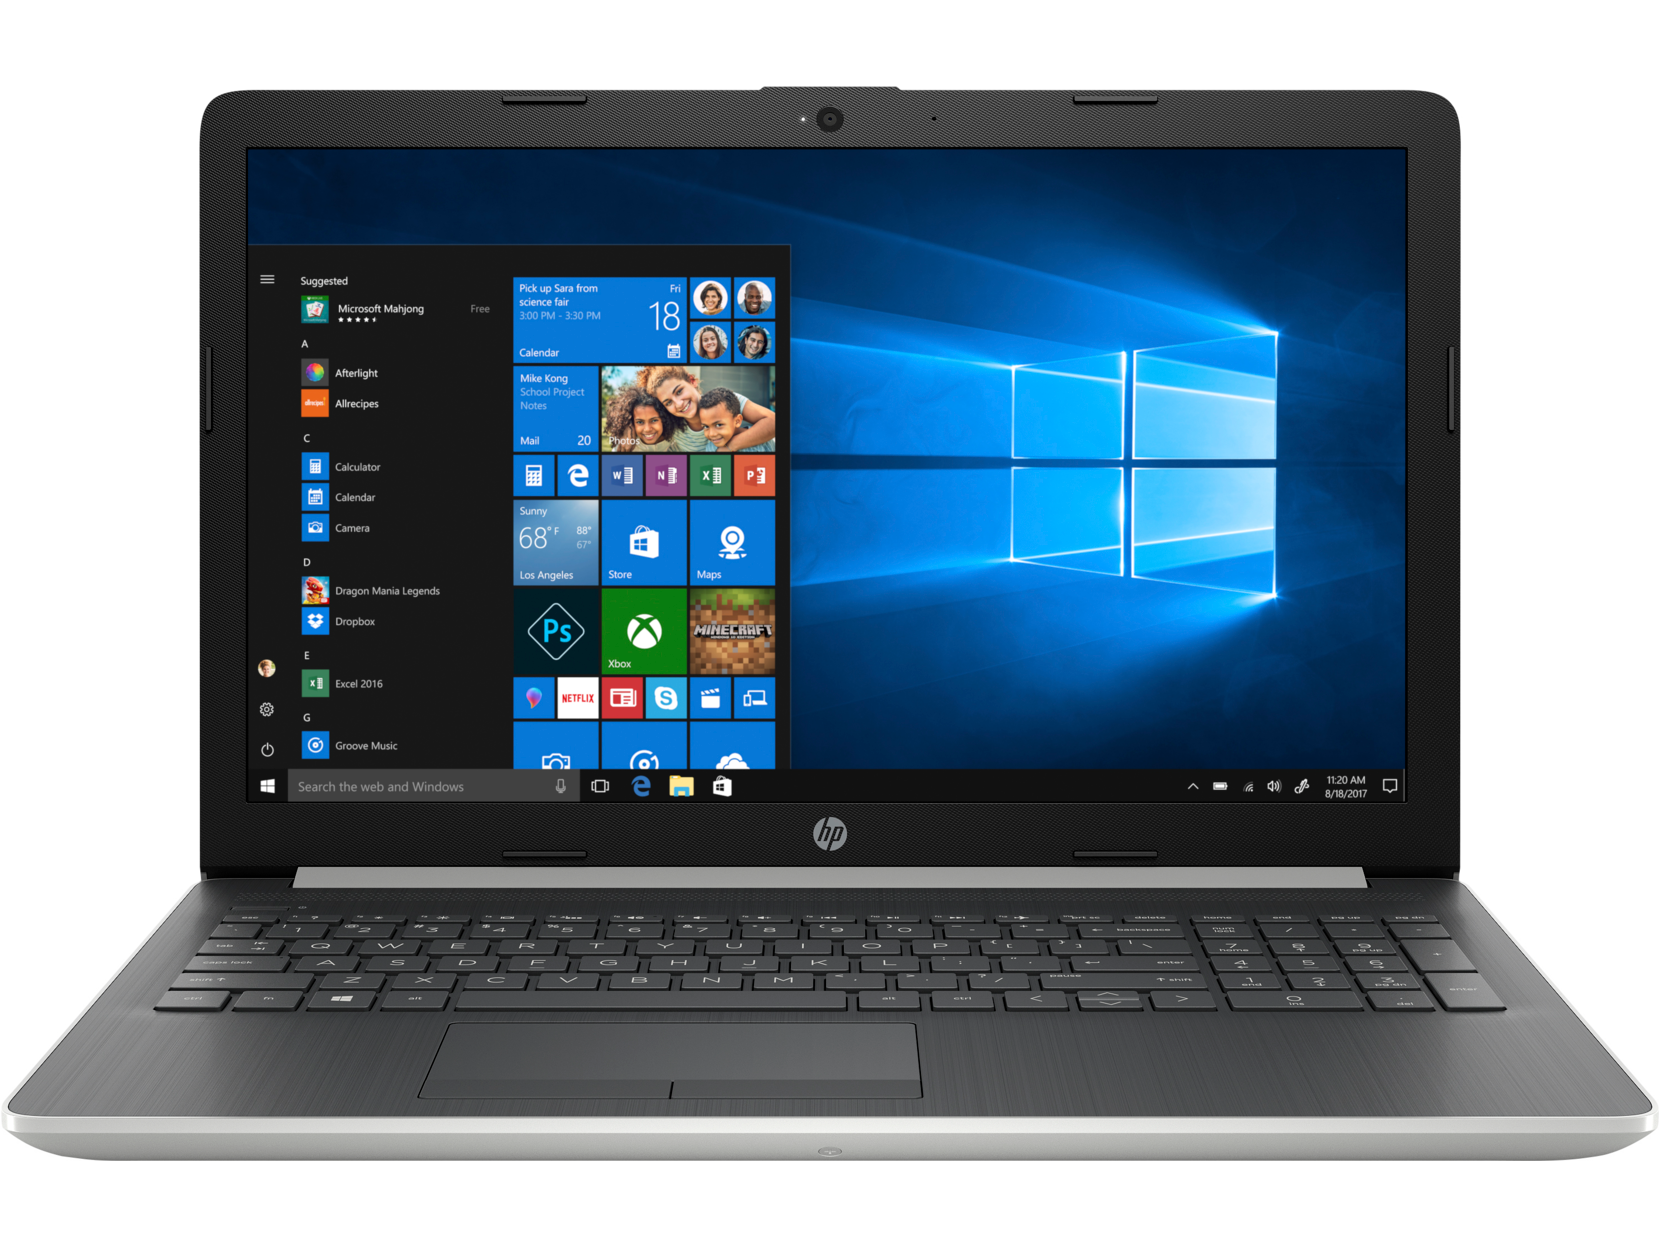 HP 15-da2035nt i7-10510U 8GB 256GB SSD Windows 10 Home 15.6 NVIDIA MX130 9RG83EA